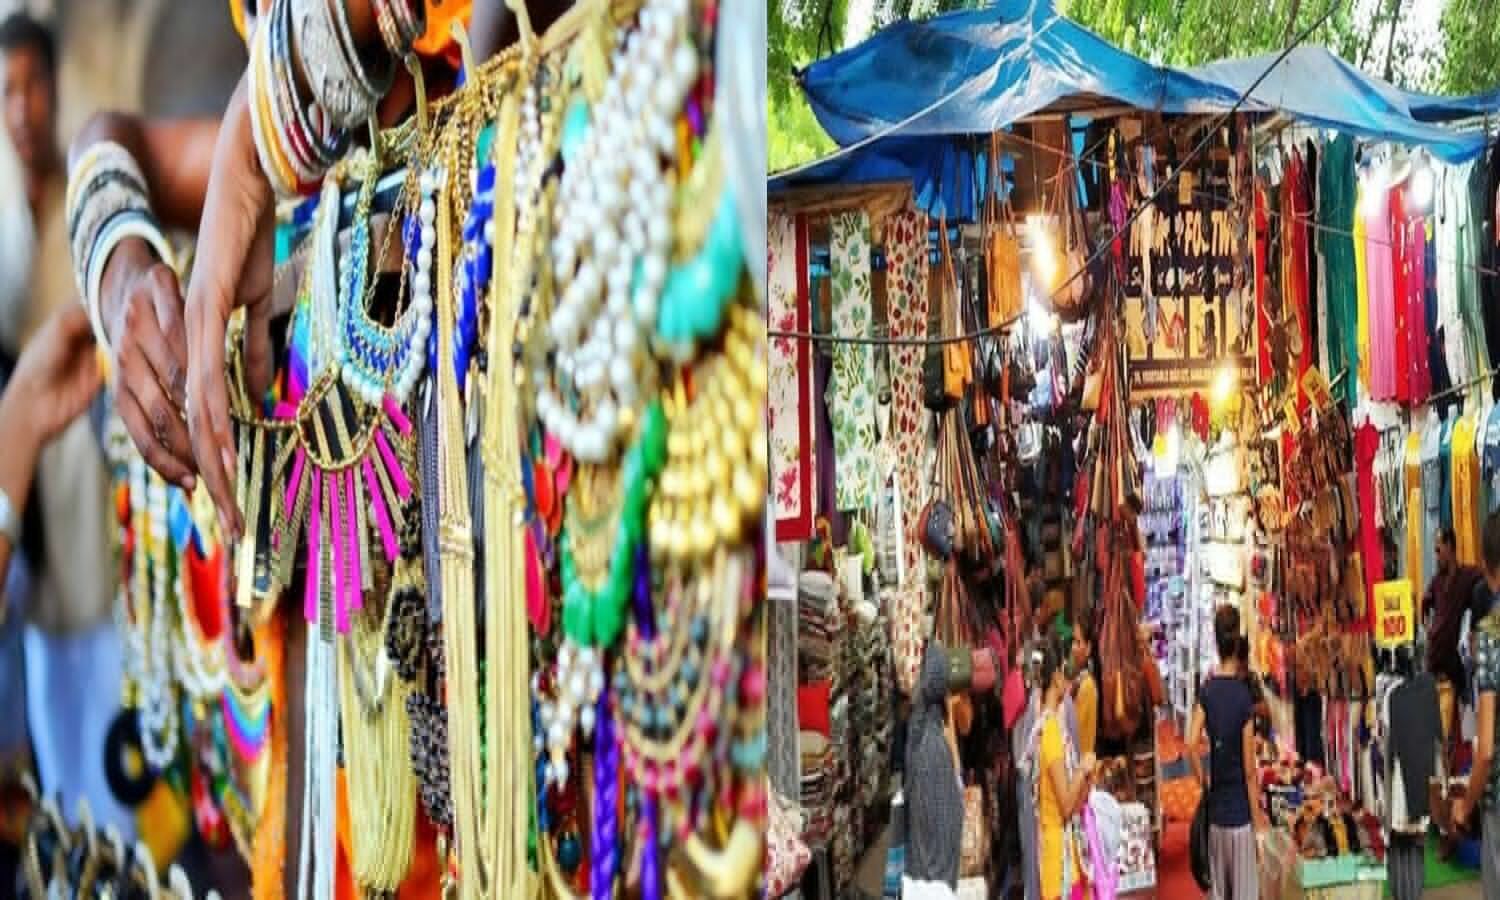 Janpath Market in Delhi: Janpath Market best place to shop in Delhi, buy unique items here